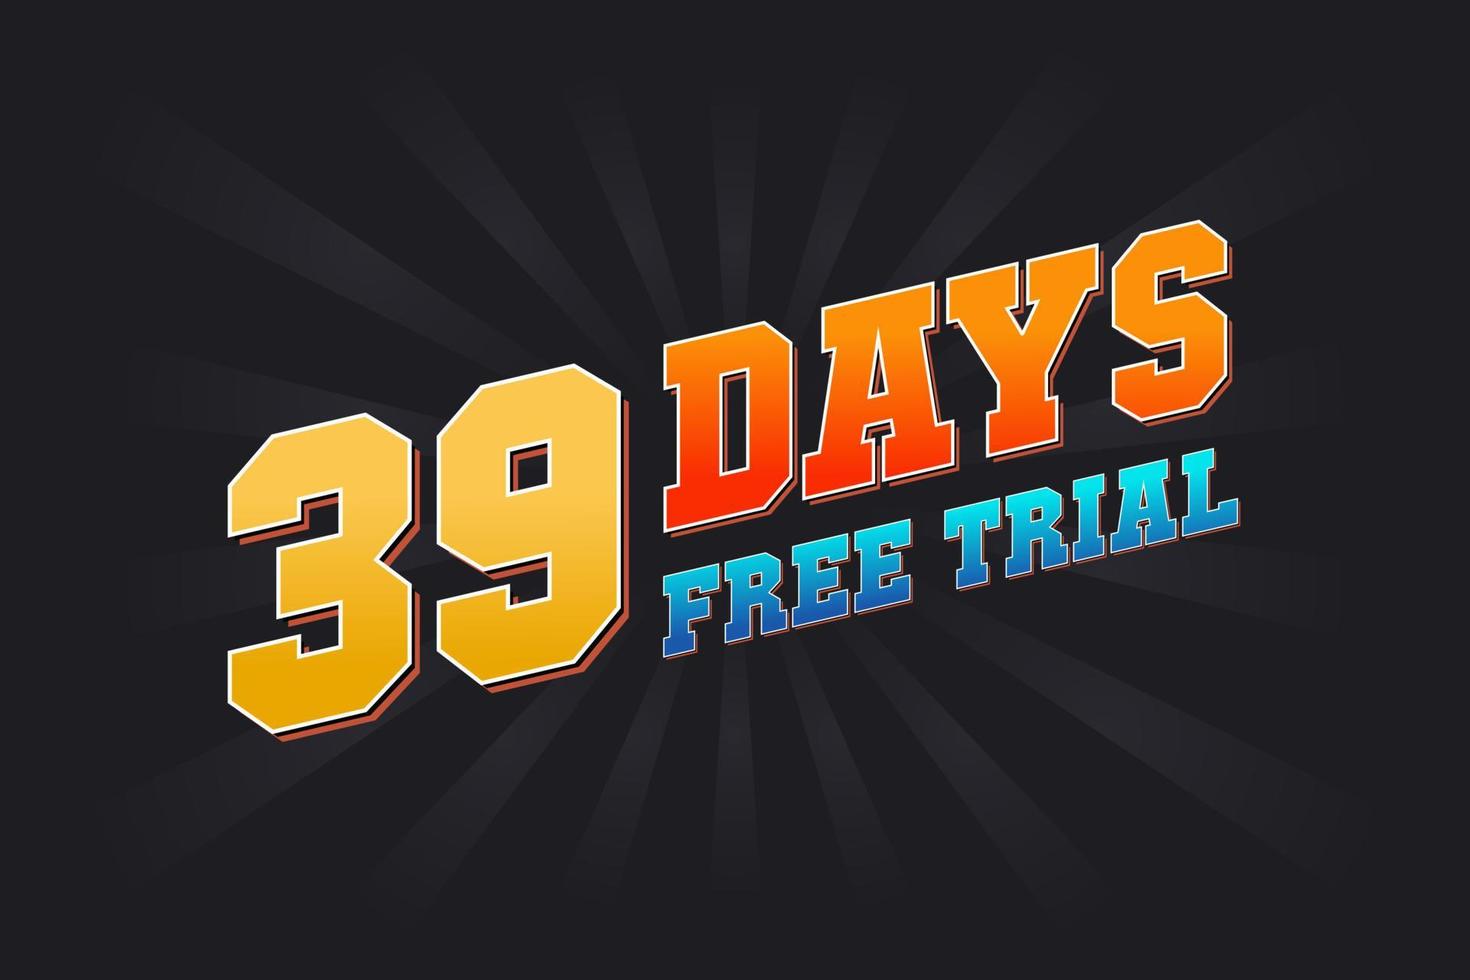 Vector de stock de texto en negrita promocional de prueba gratuita de 39 días